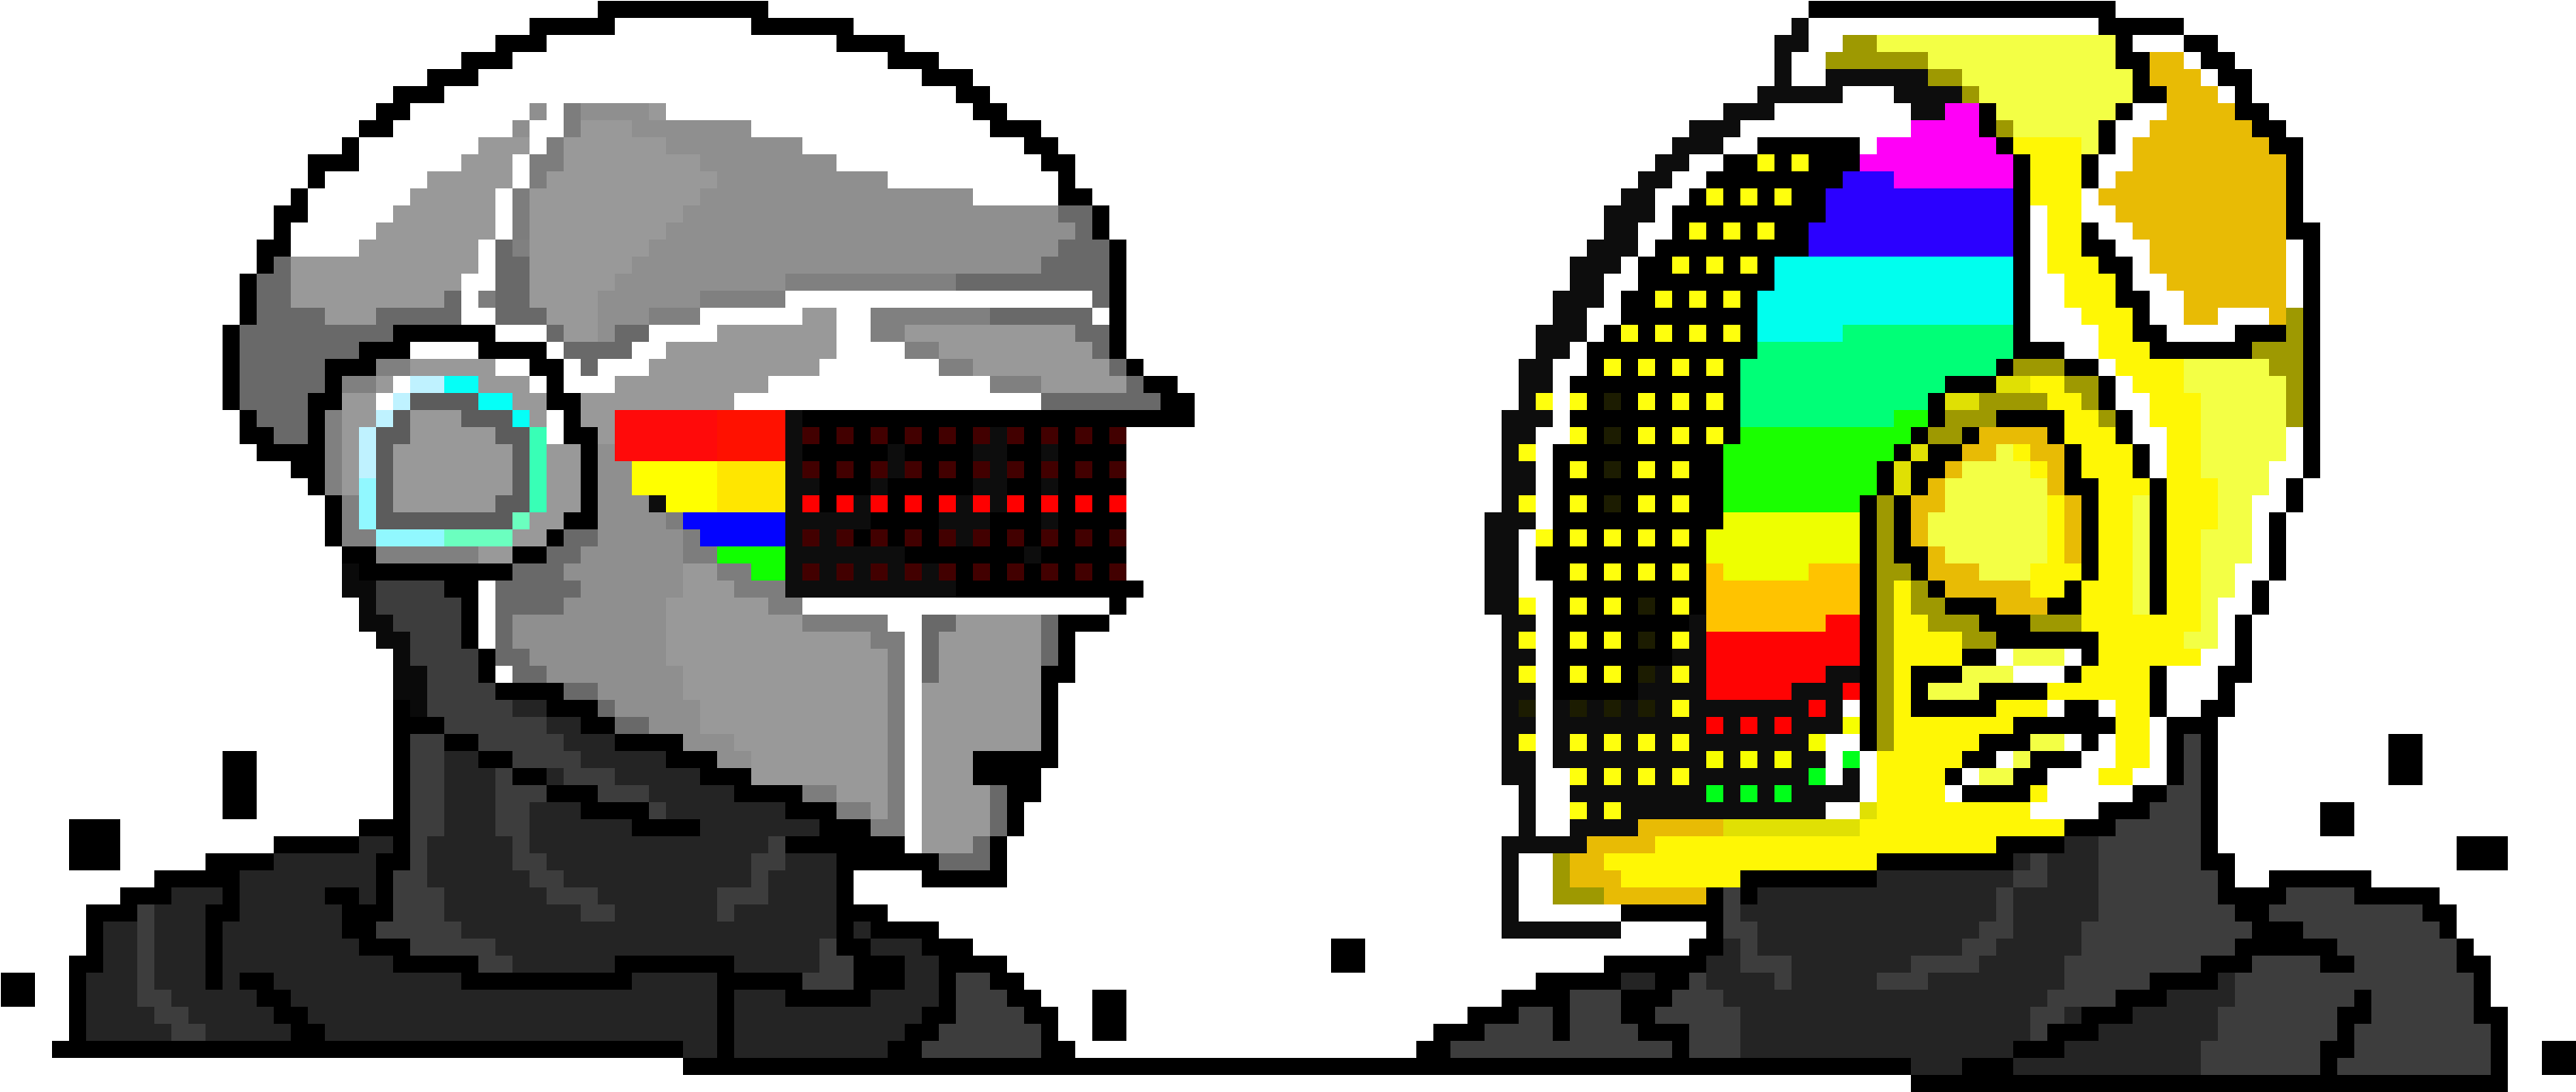 Daft Punk Pixel Art Maker - Daft Punk Icons (3100x1440)